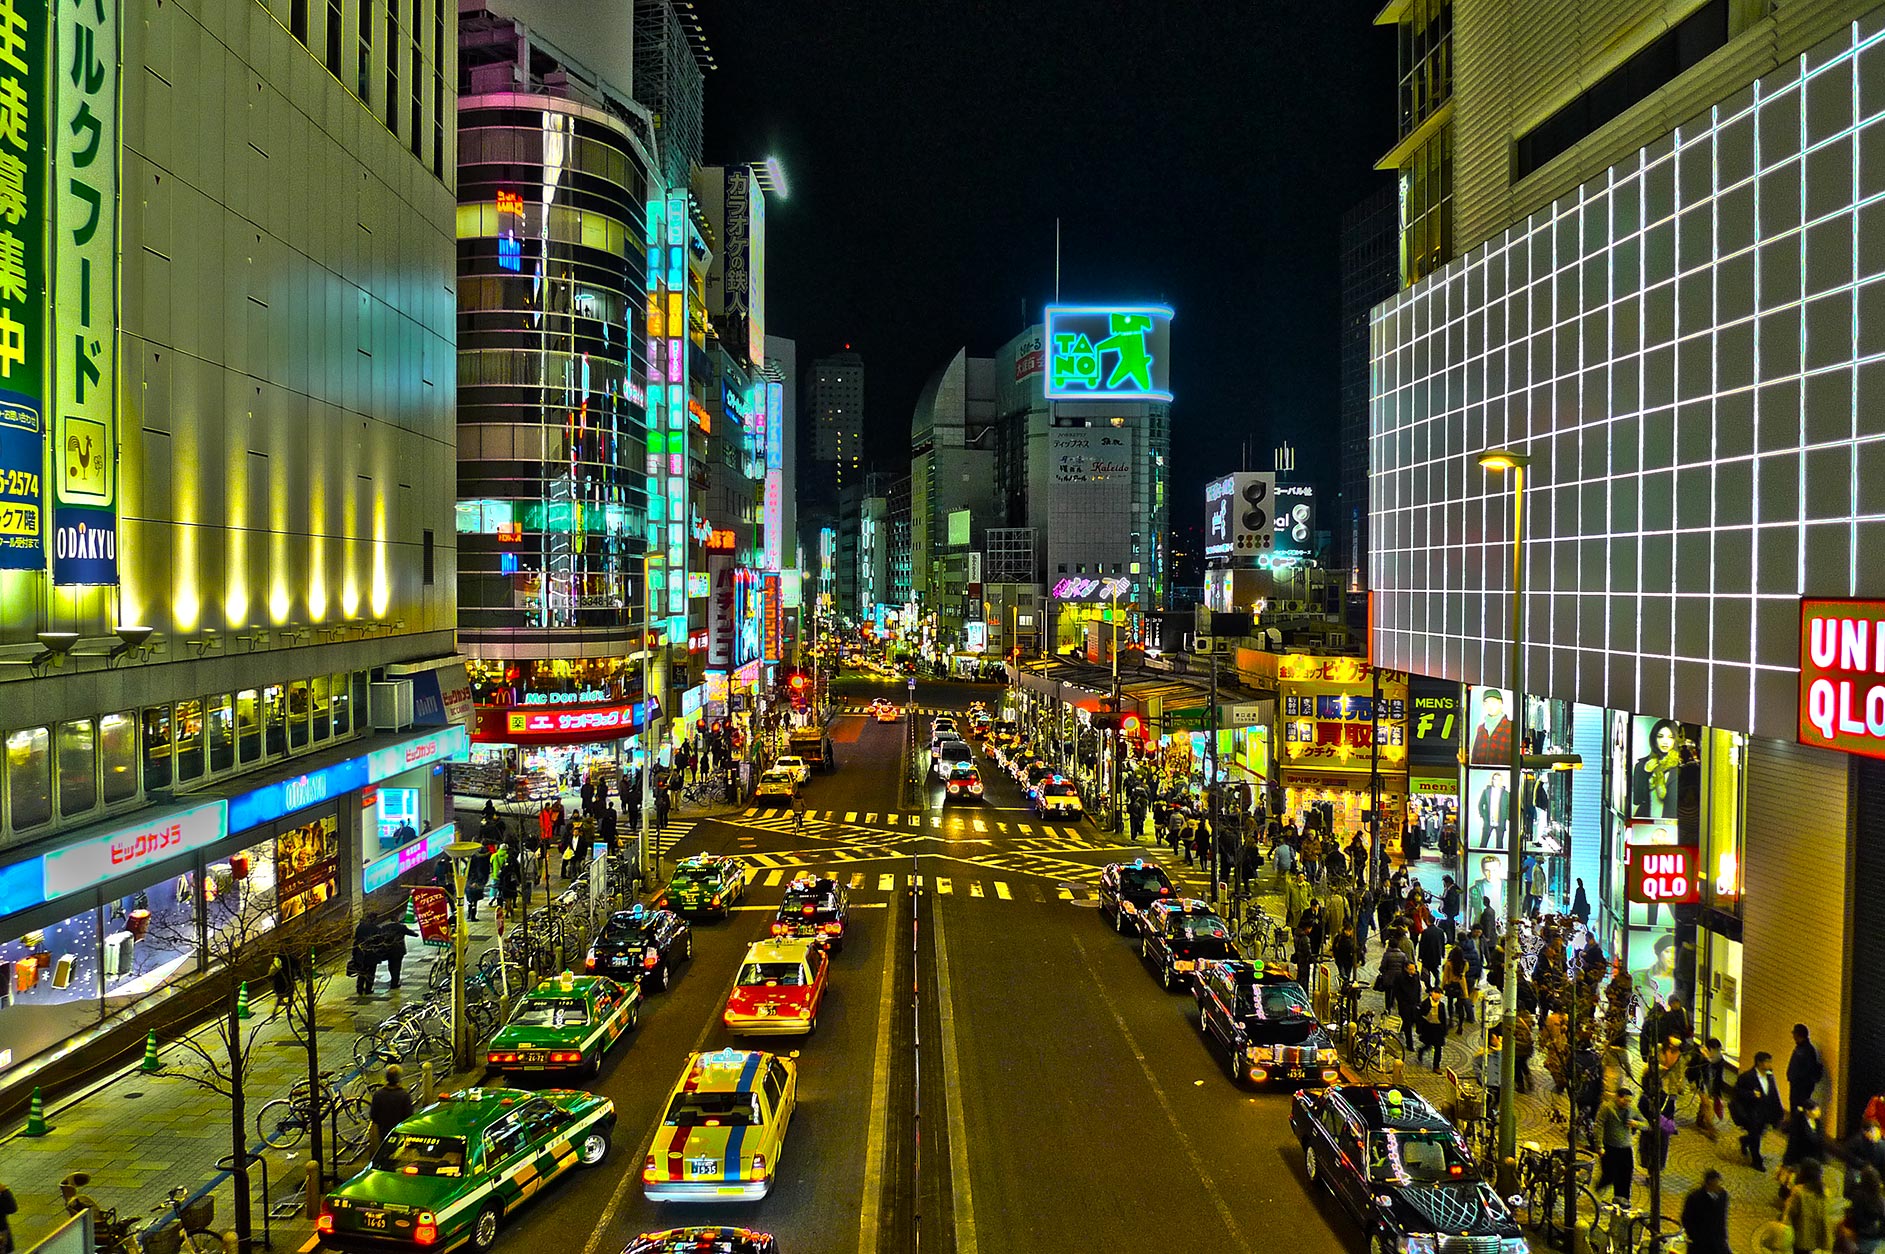 Shinjuku: Strolling Around Inner City Tokyo